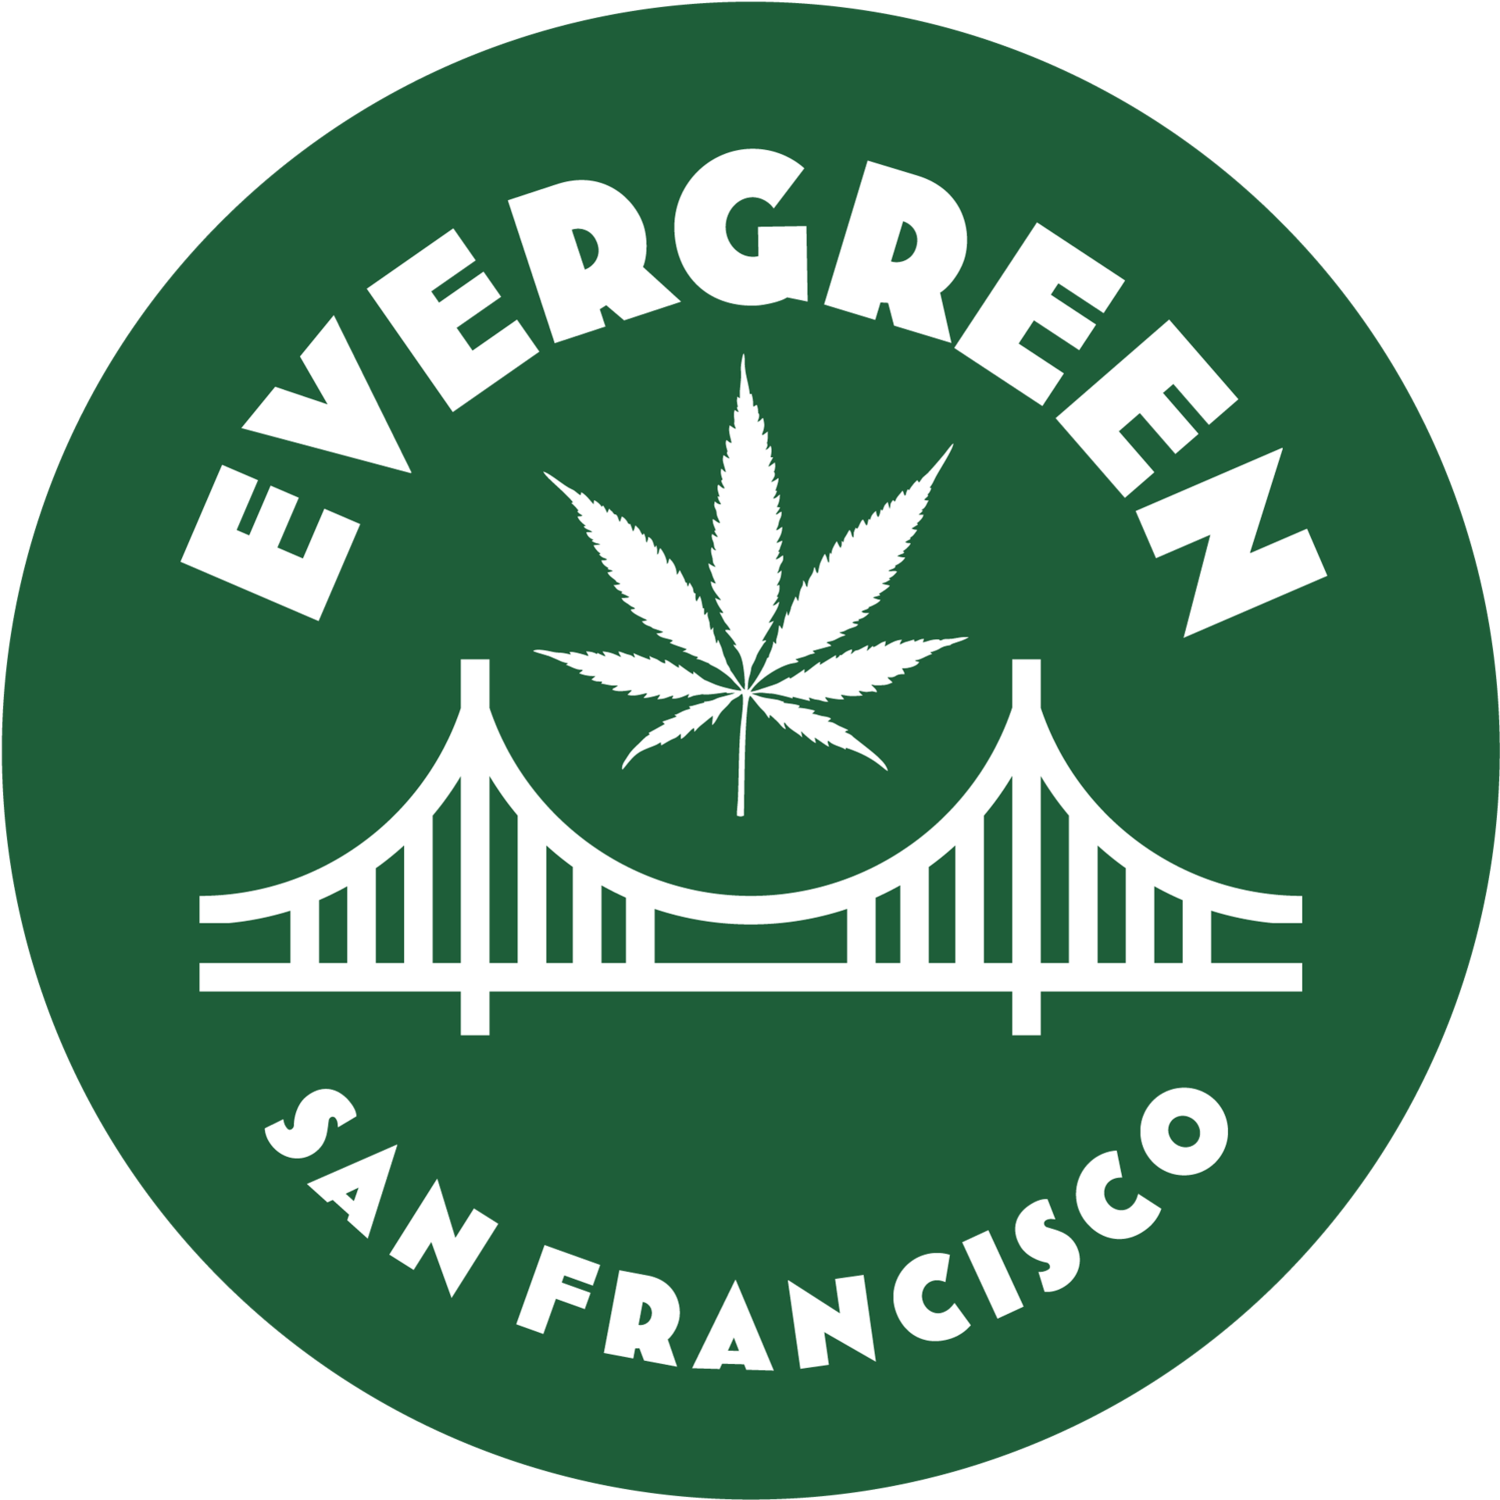 Evergreen San Francisco